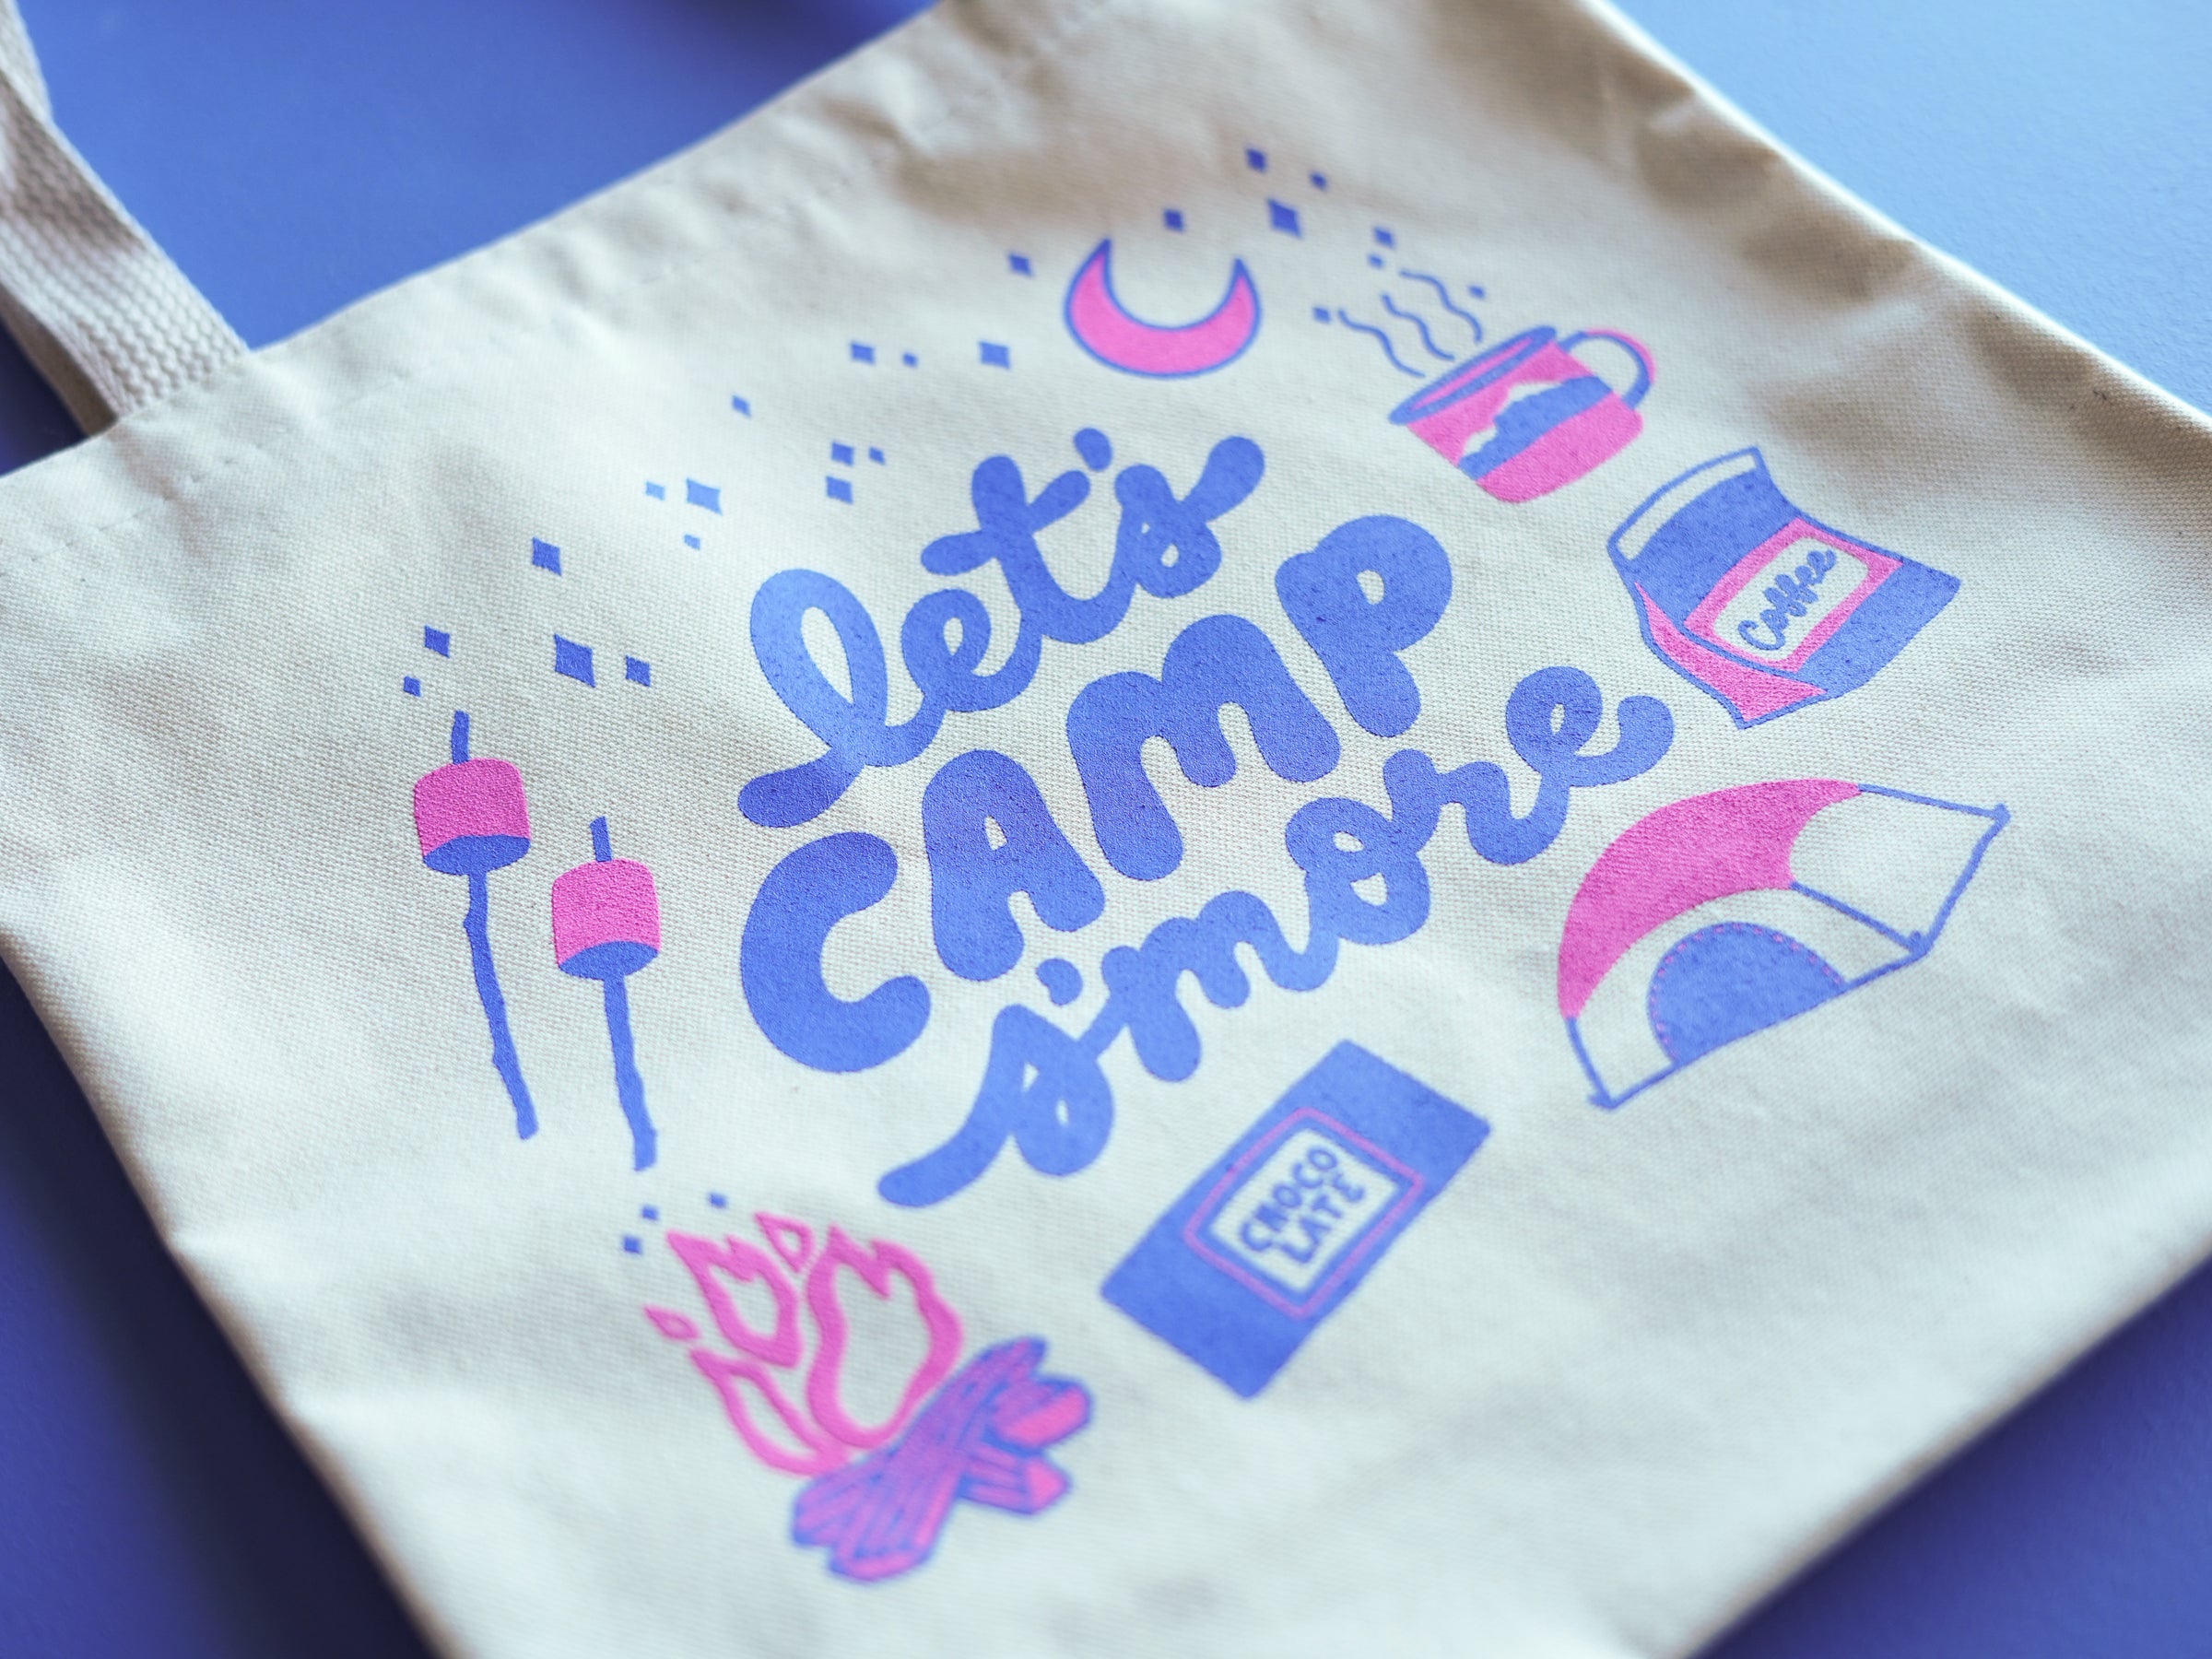 Let’s Camp S’more Tote Bag